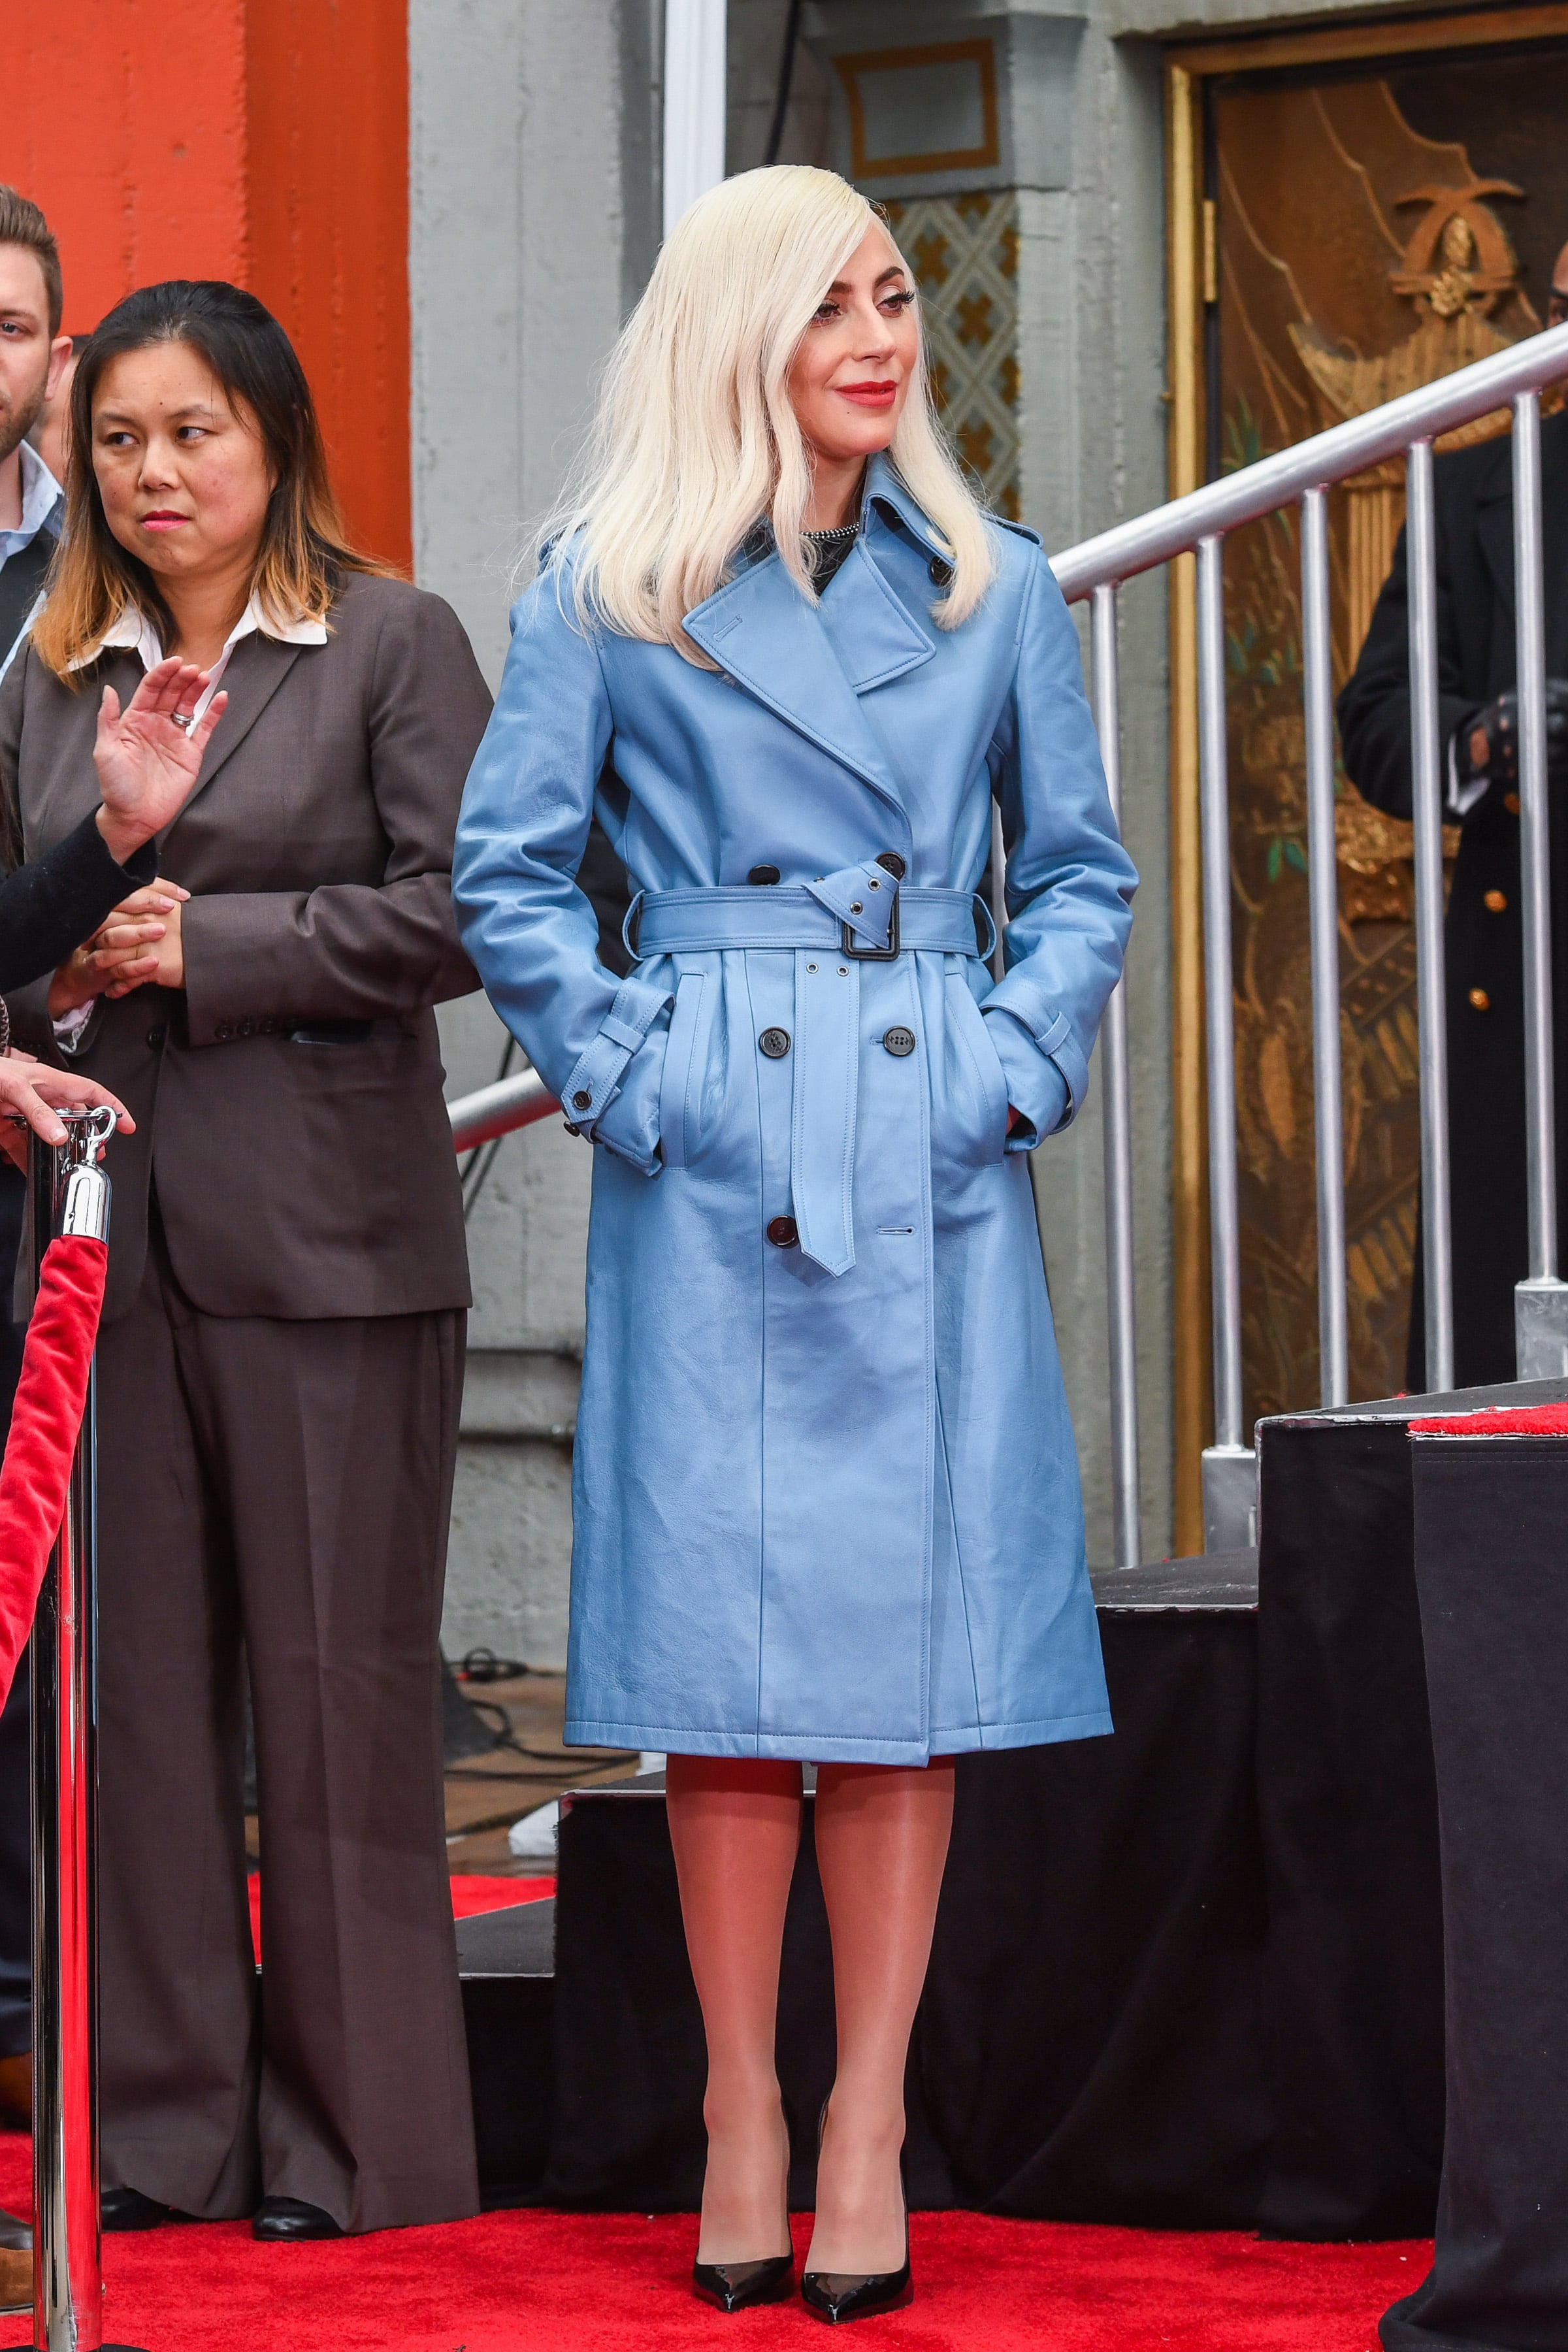 Jessica London Women's Plus Size Leather Swing Coat Leather Jacket 